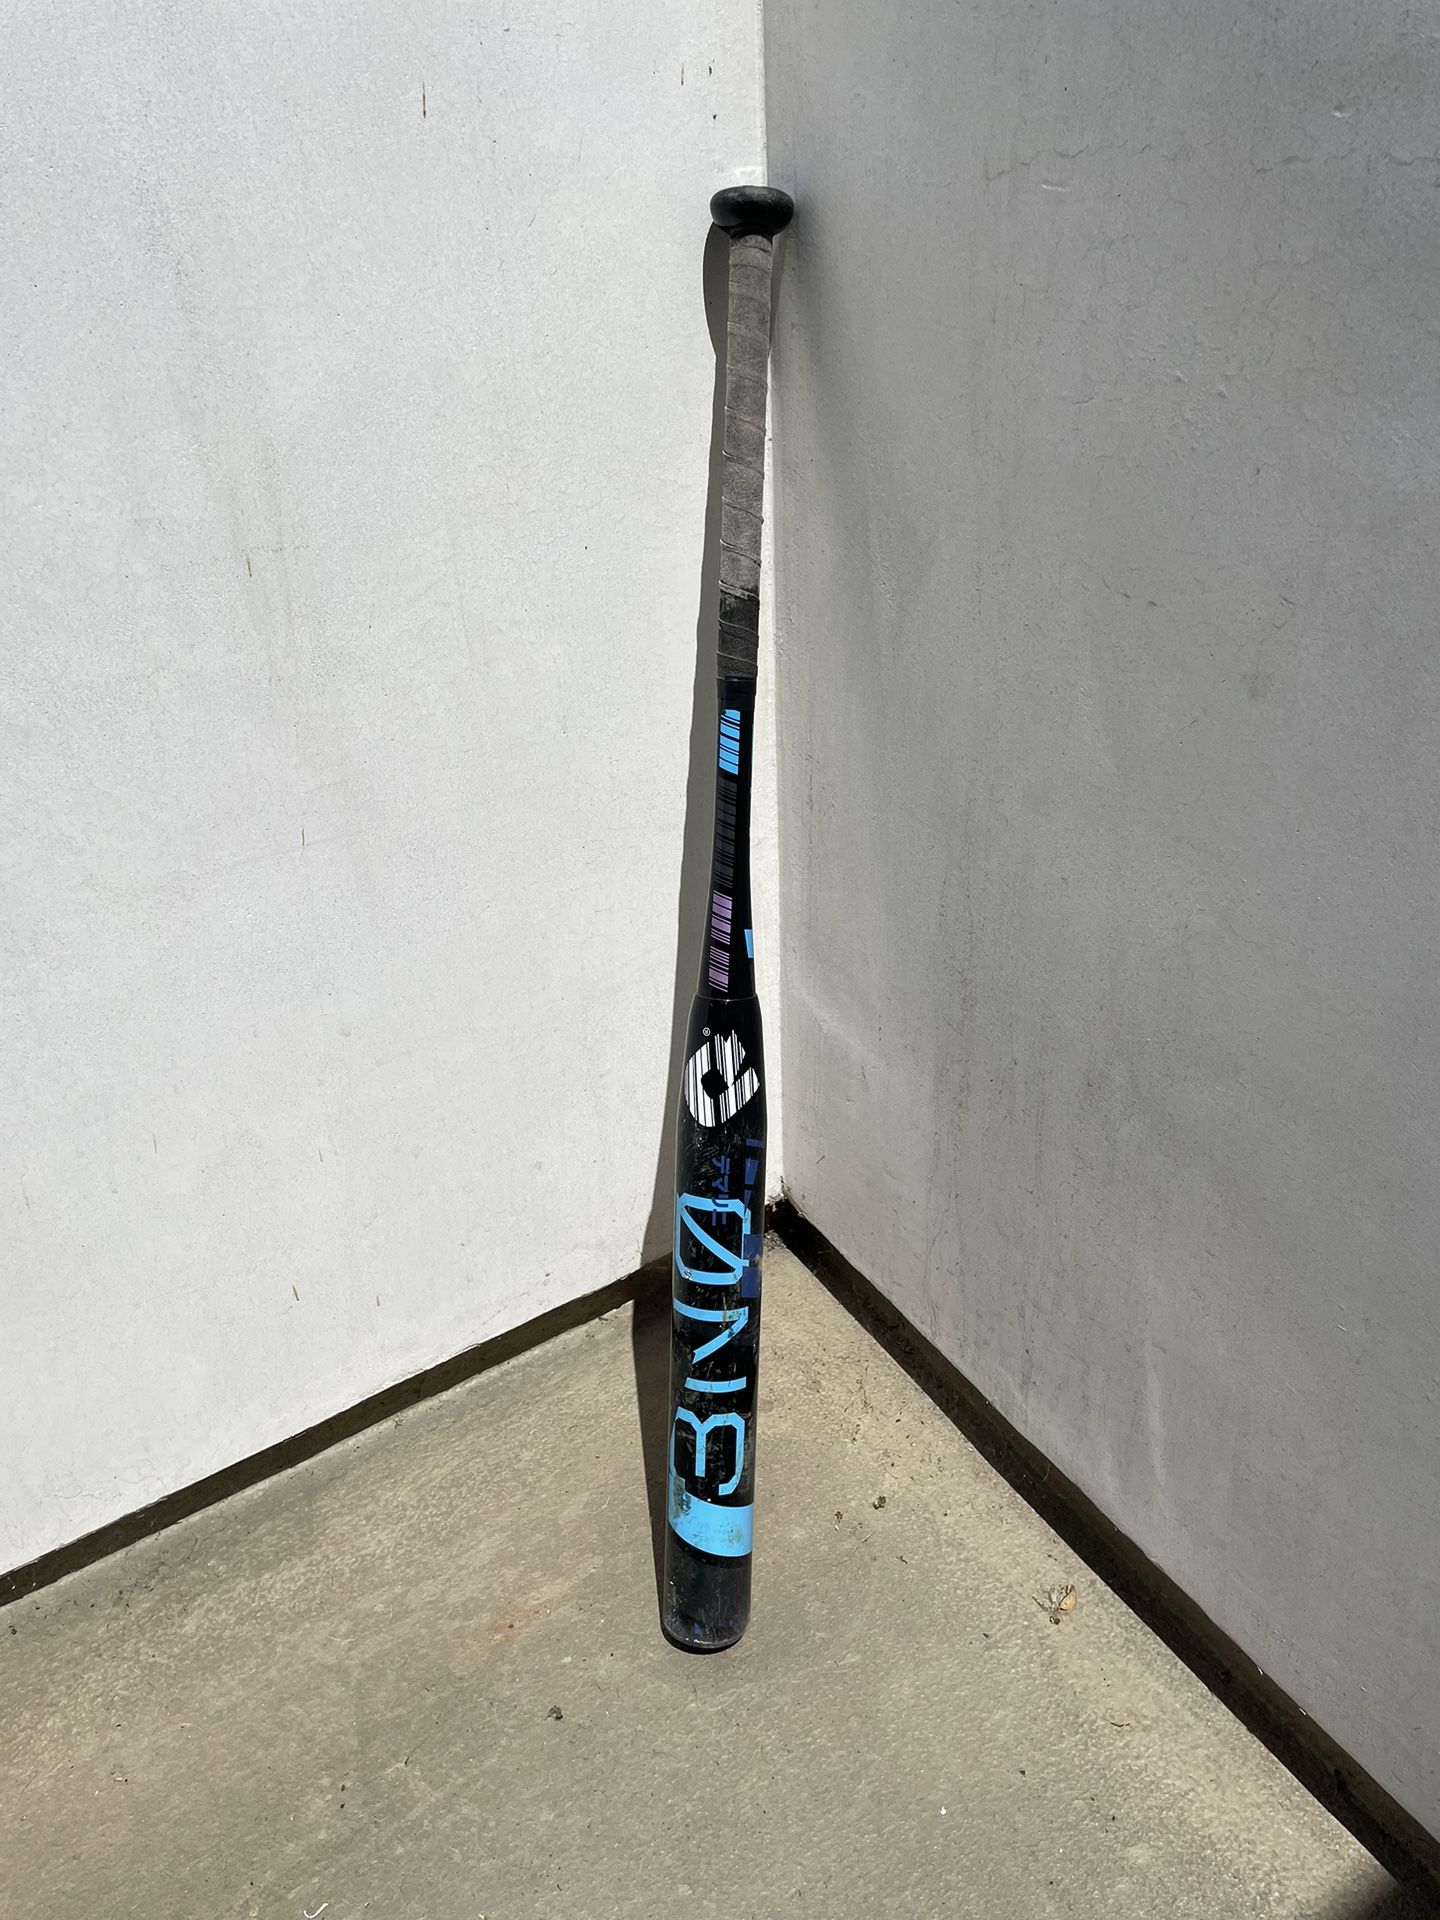 DeMarini - The ONE - Slowpitch Softball Bat - 34/28